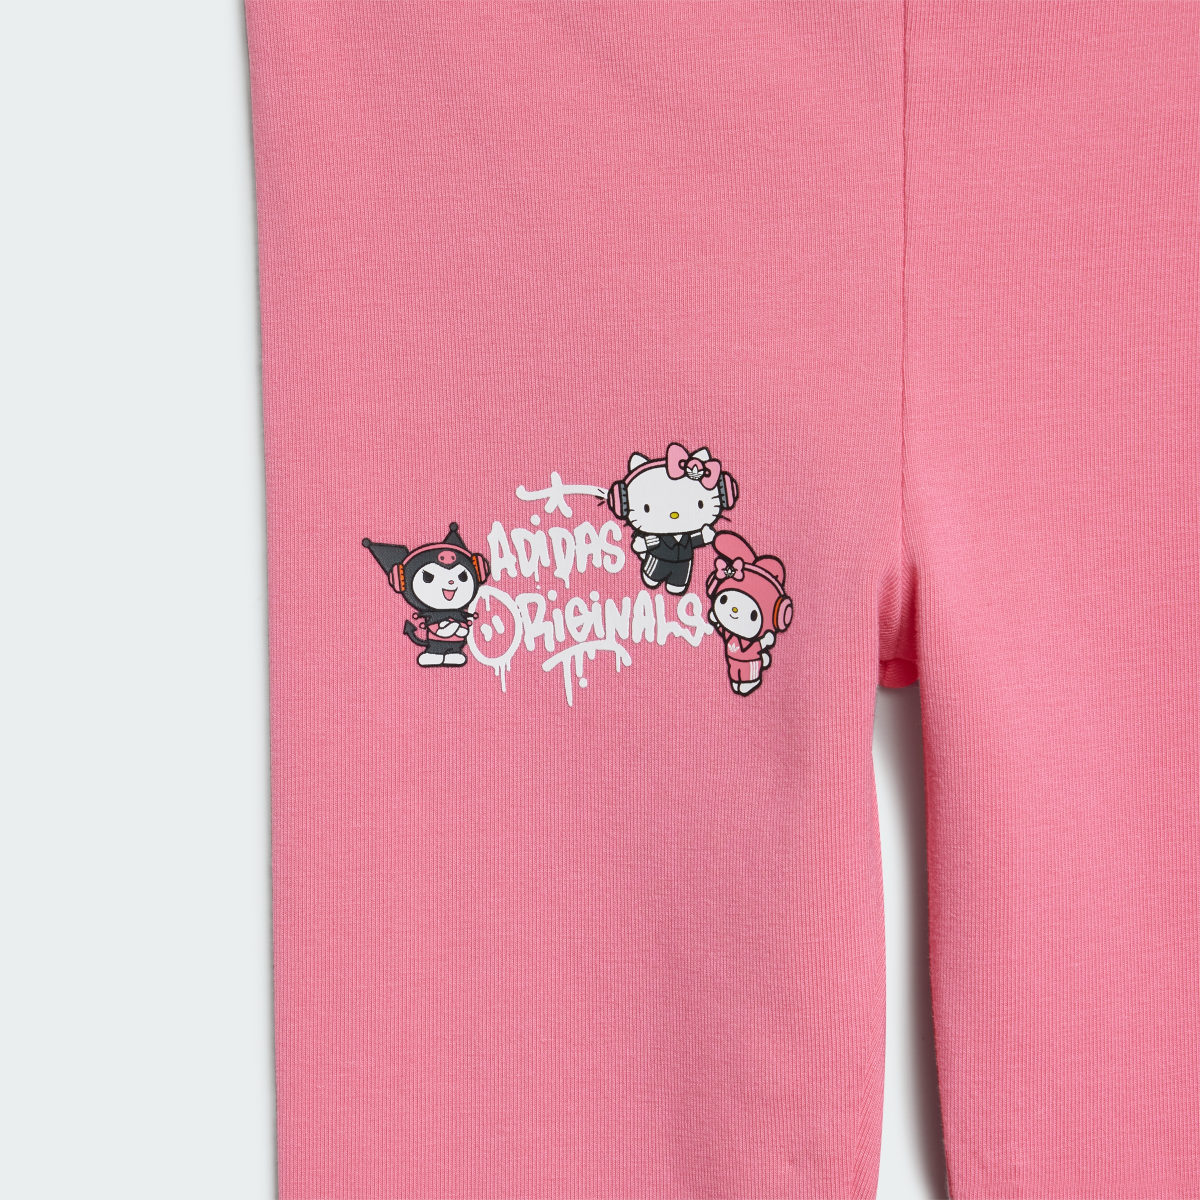 Adidas Originals x Hello Kitty Elbise Tayt Takımı. 9